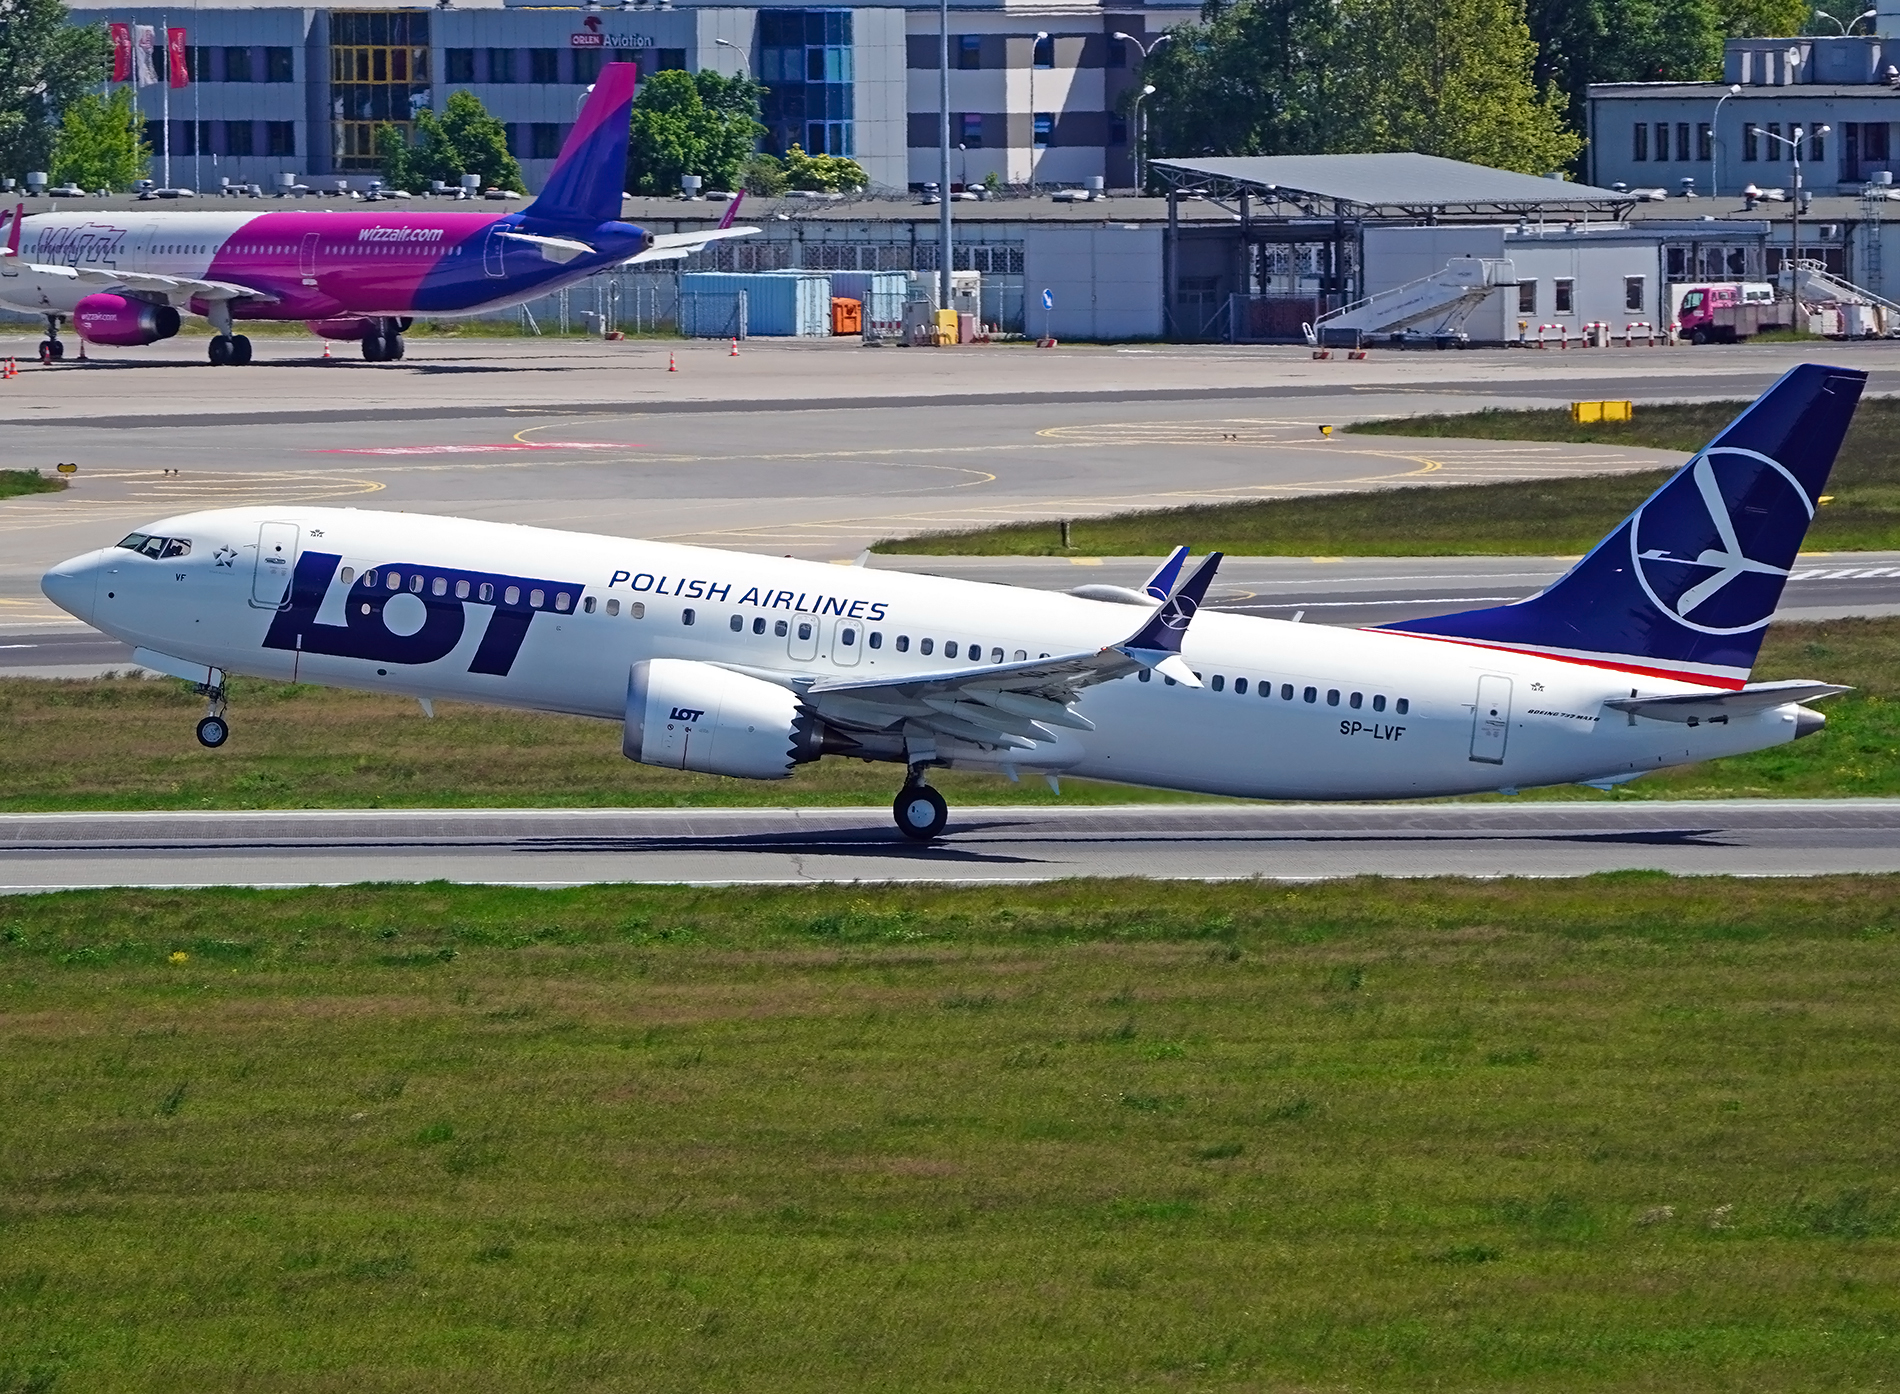 A LOT Polish Airlines 737 MAX aircraft lifts off the runway.